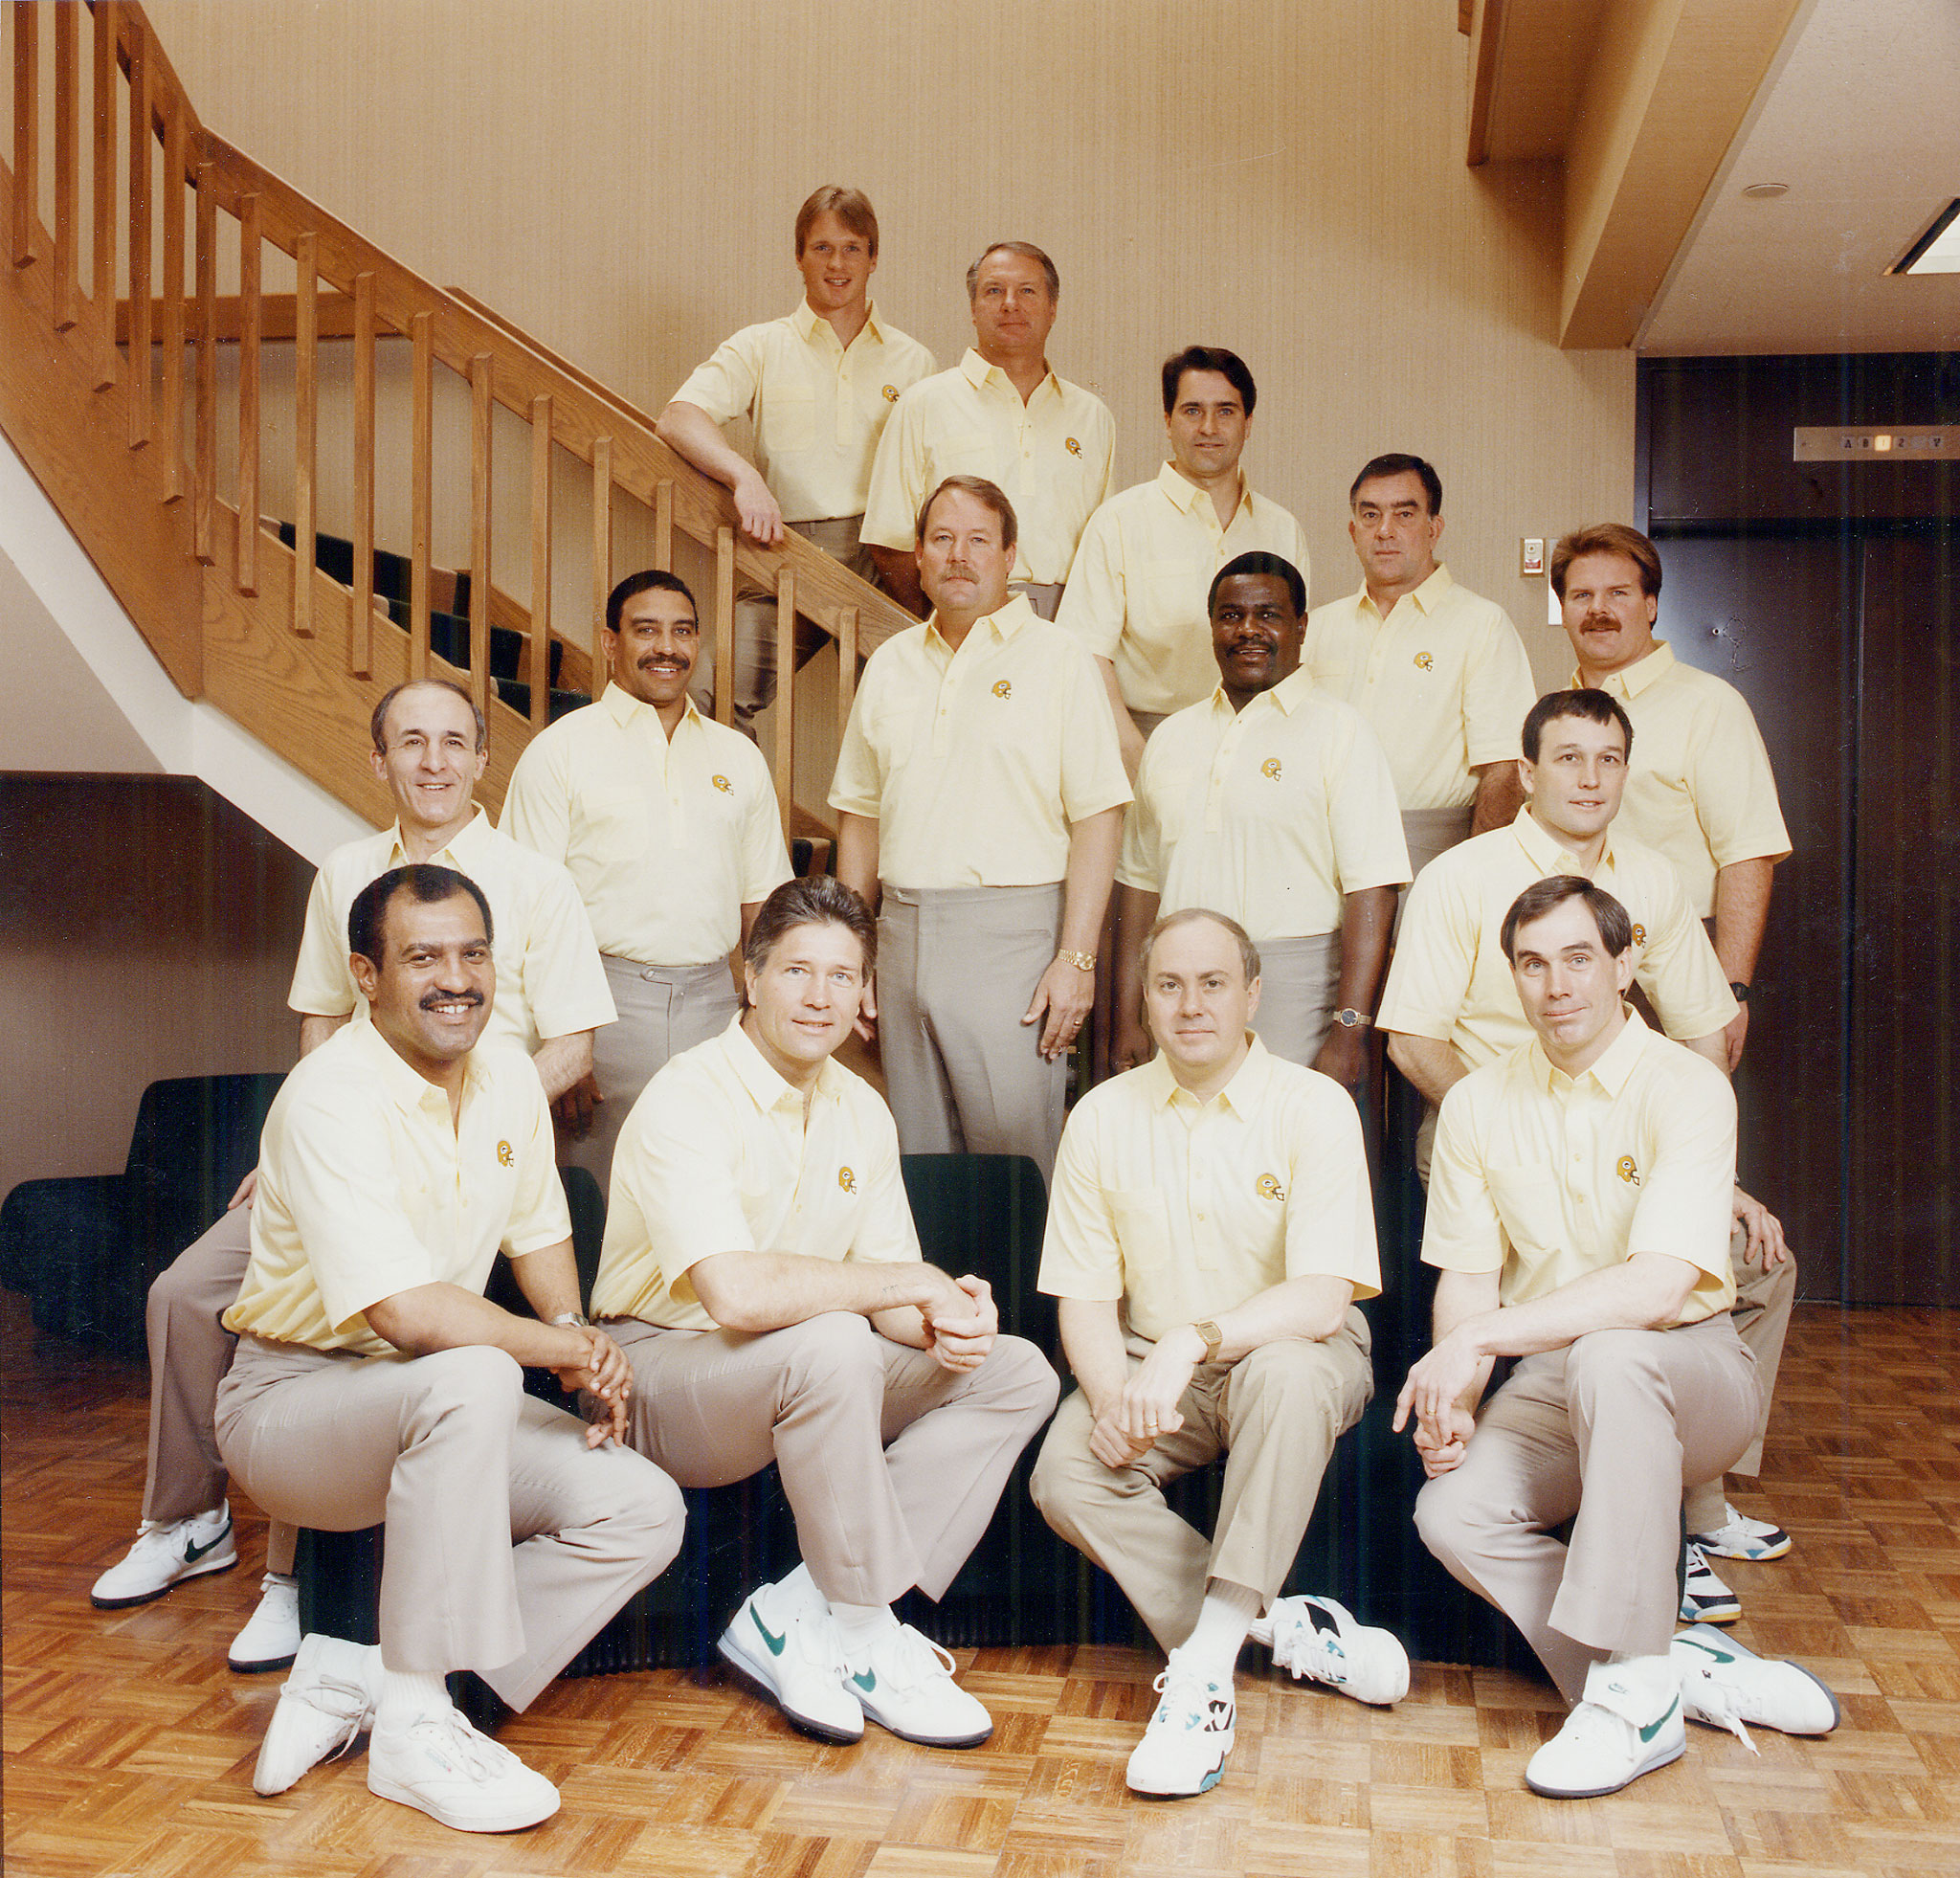 1992 Packers Coaching Staff - Bill Walsh and Mike Holmgren Coaching